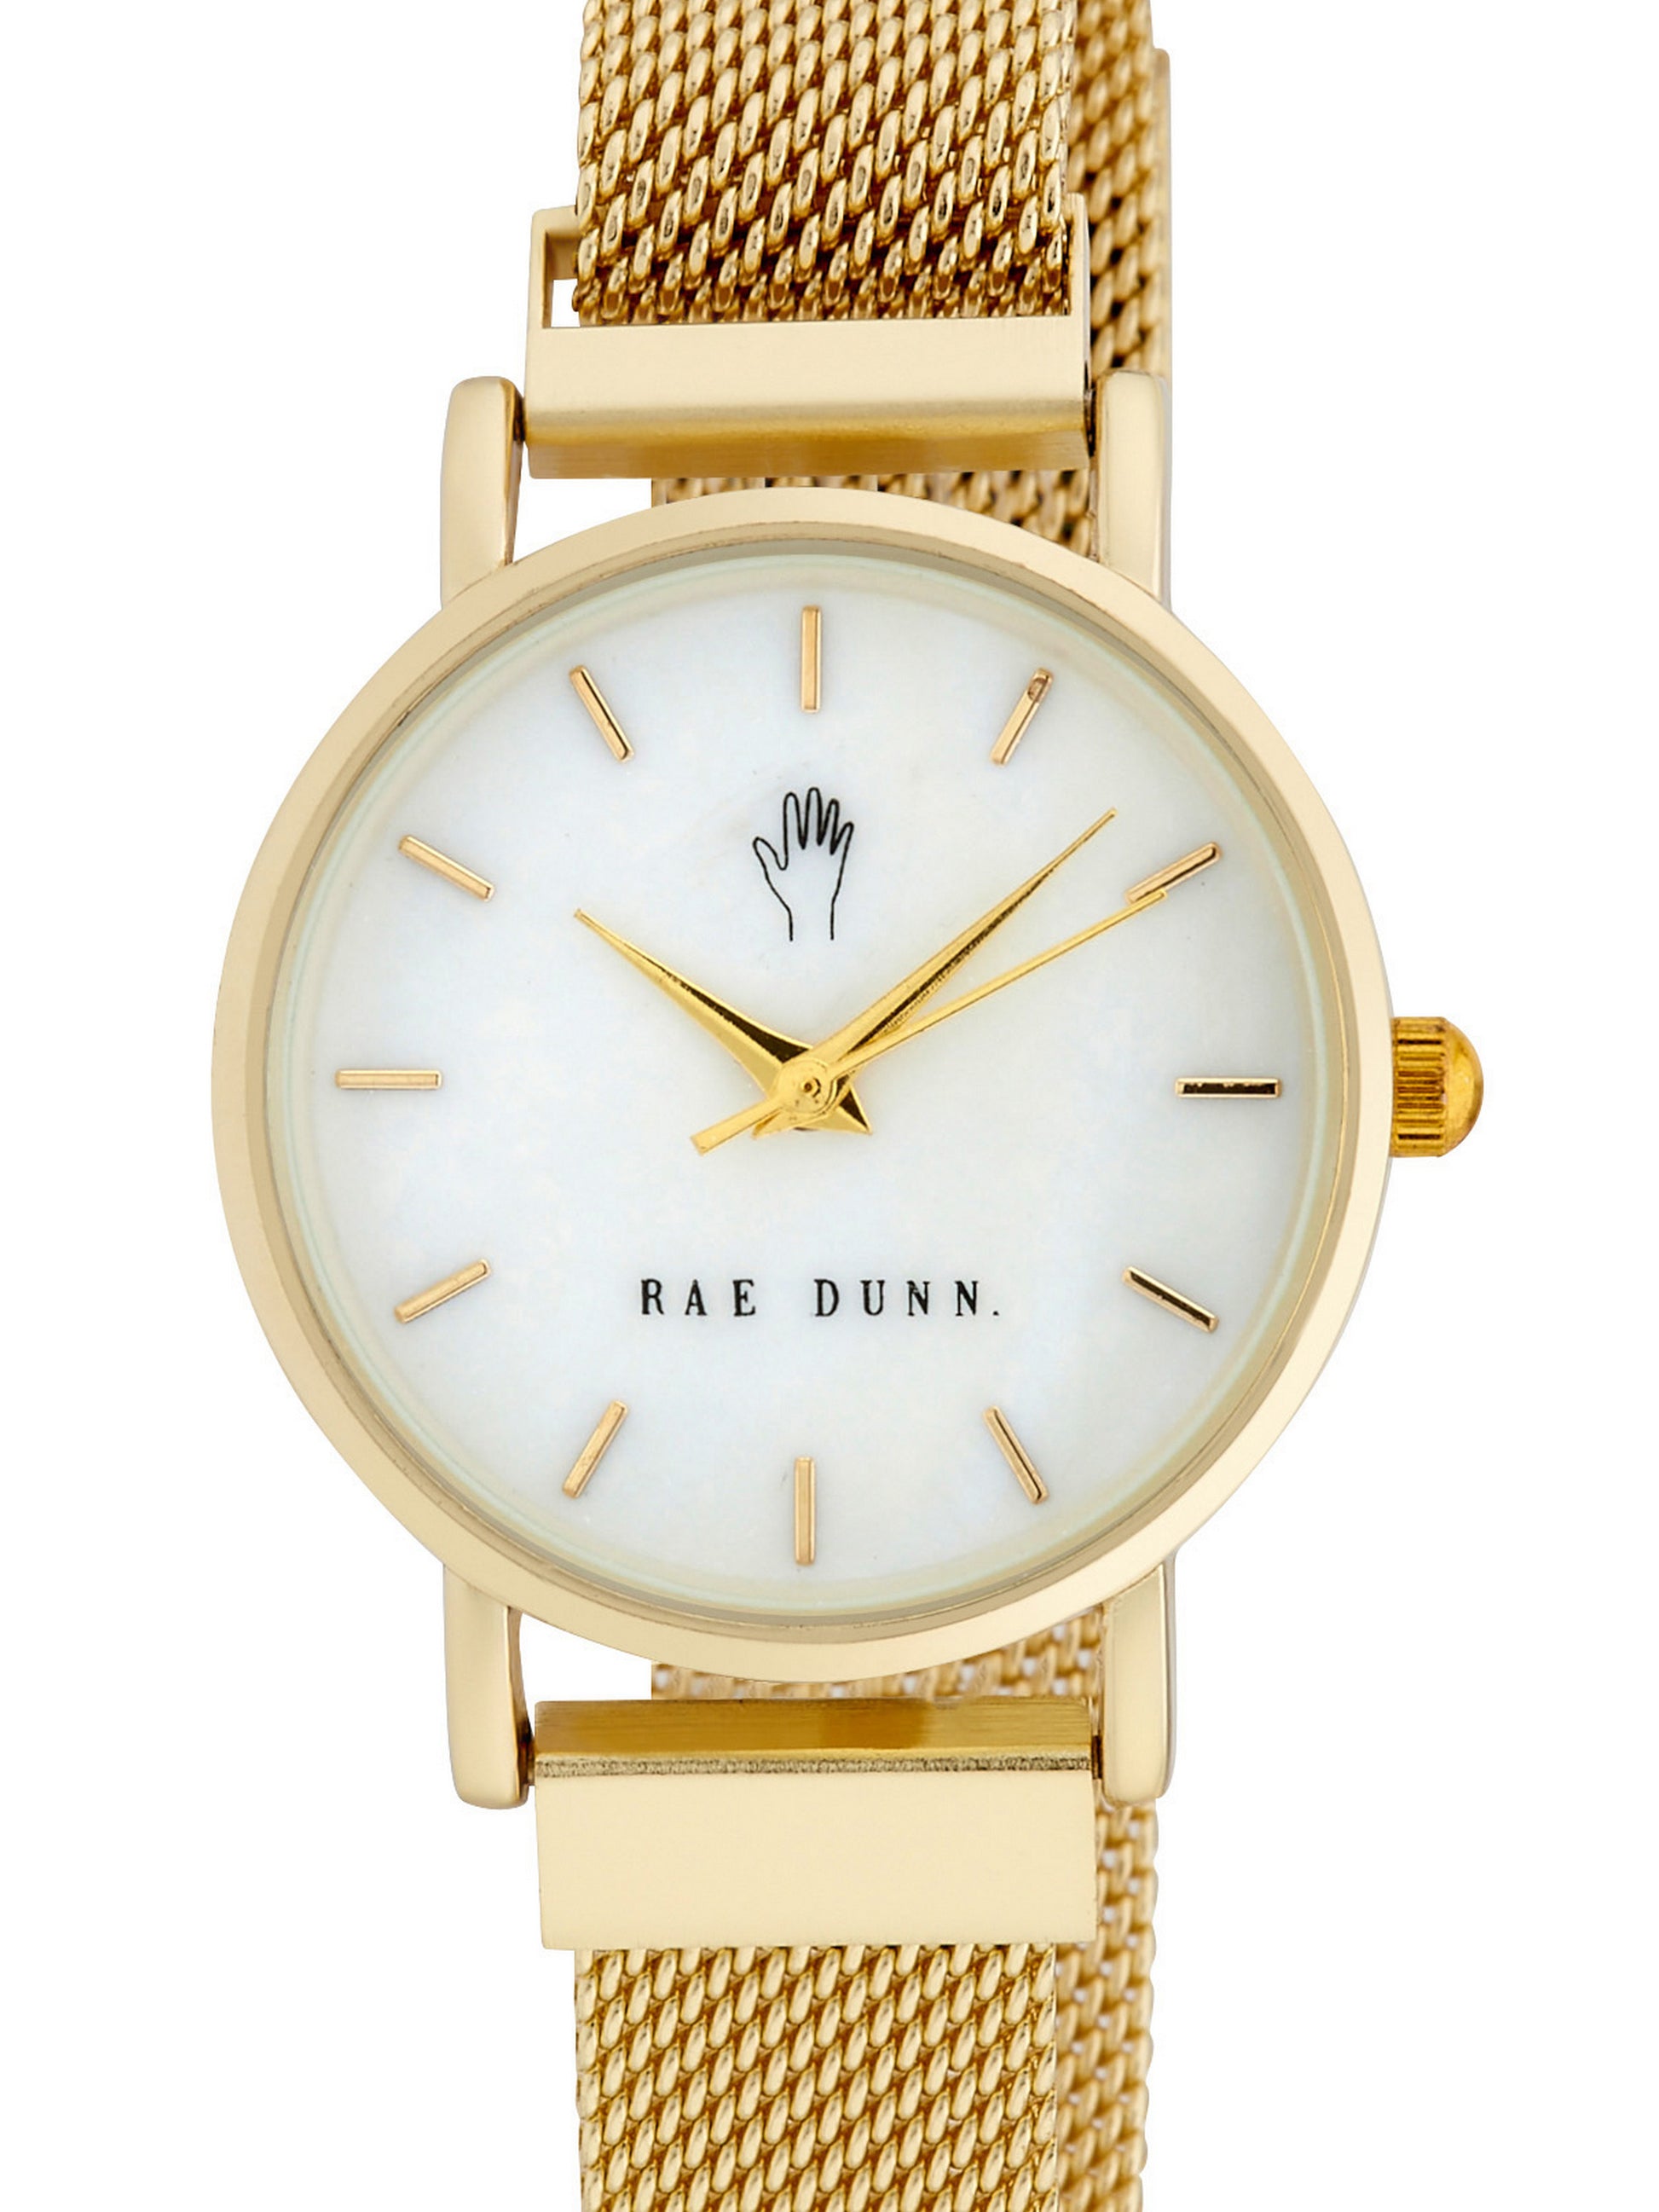 TARA Small Round Face Mesh Bracelet Watch in Gold, 29mm - Rae Dunn Wear - Watch